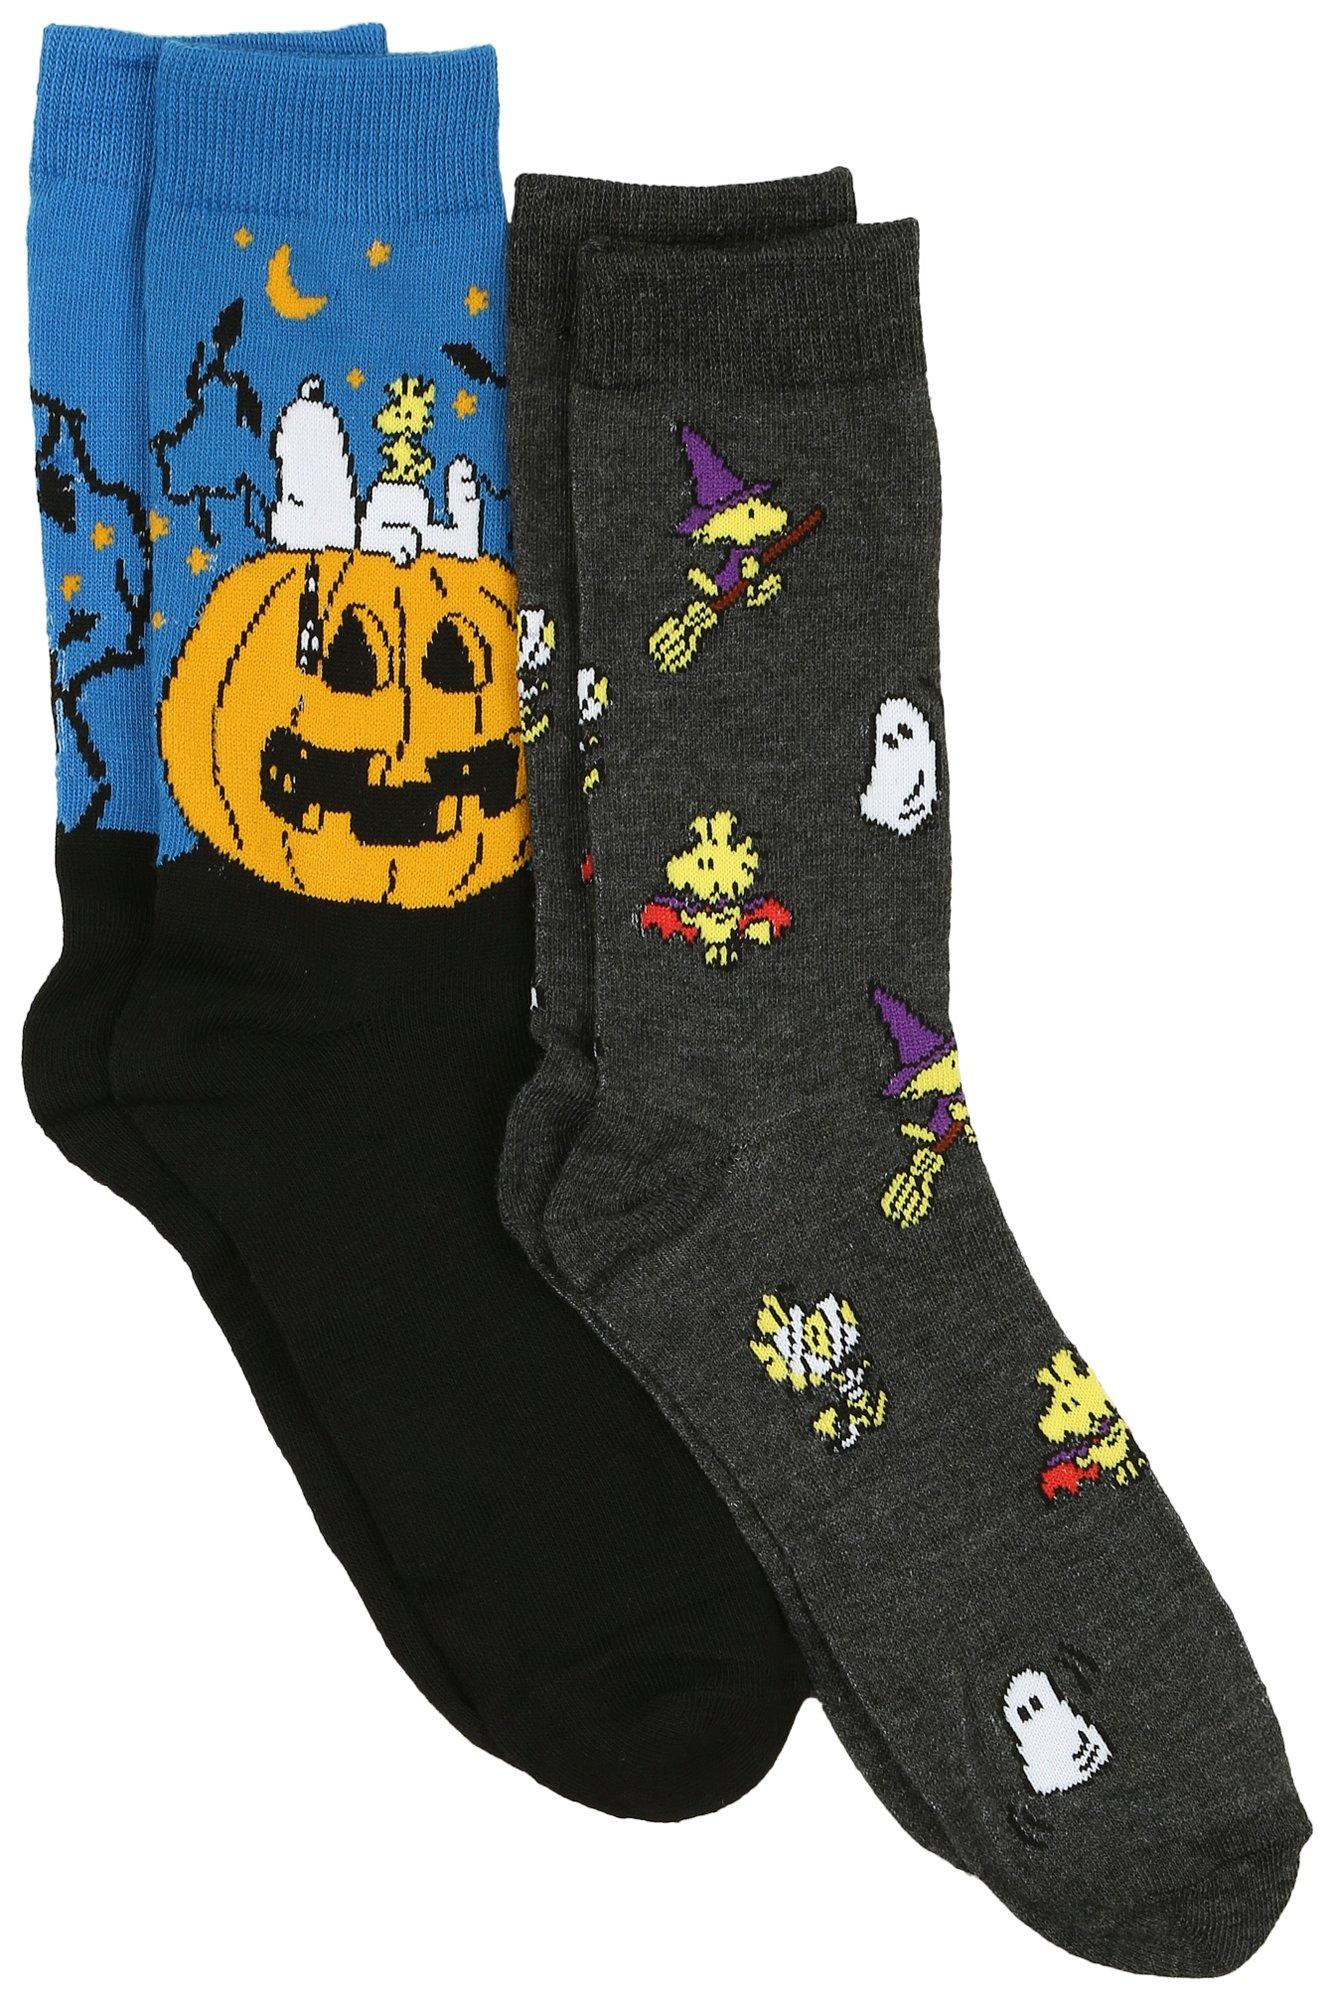 Mens 2pk. Halloween Peanuts Crew Socks